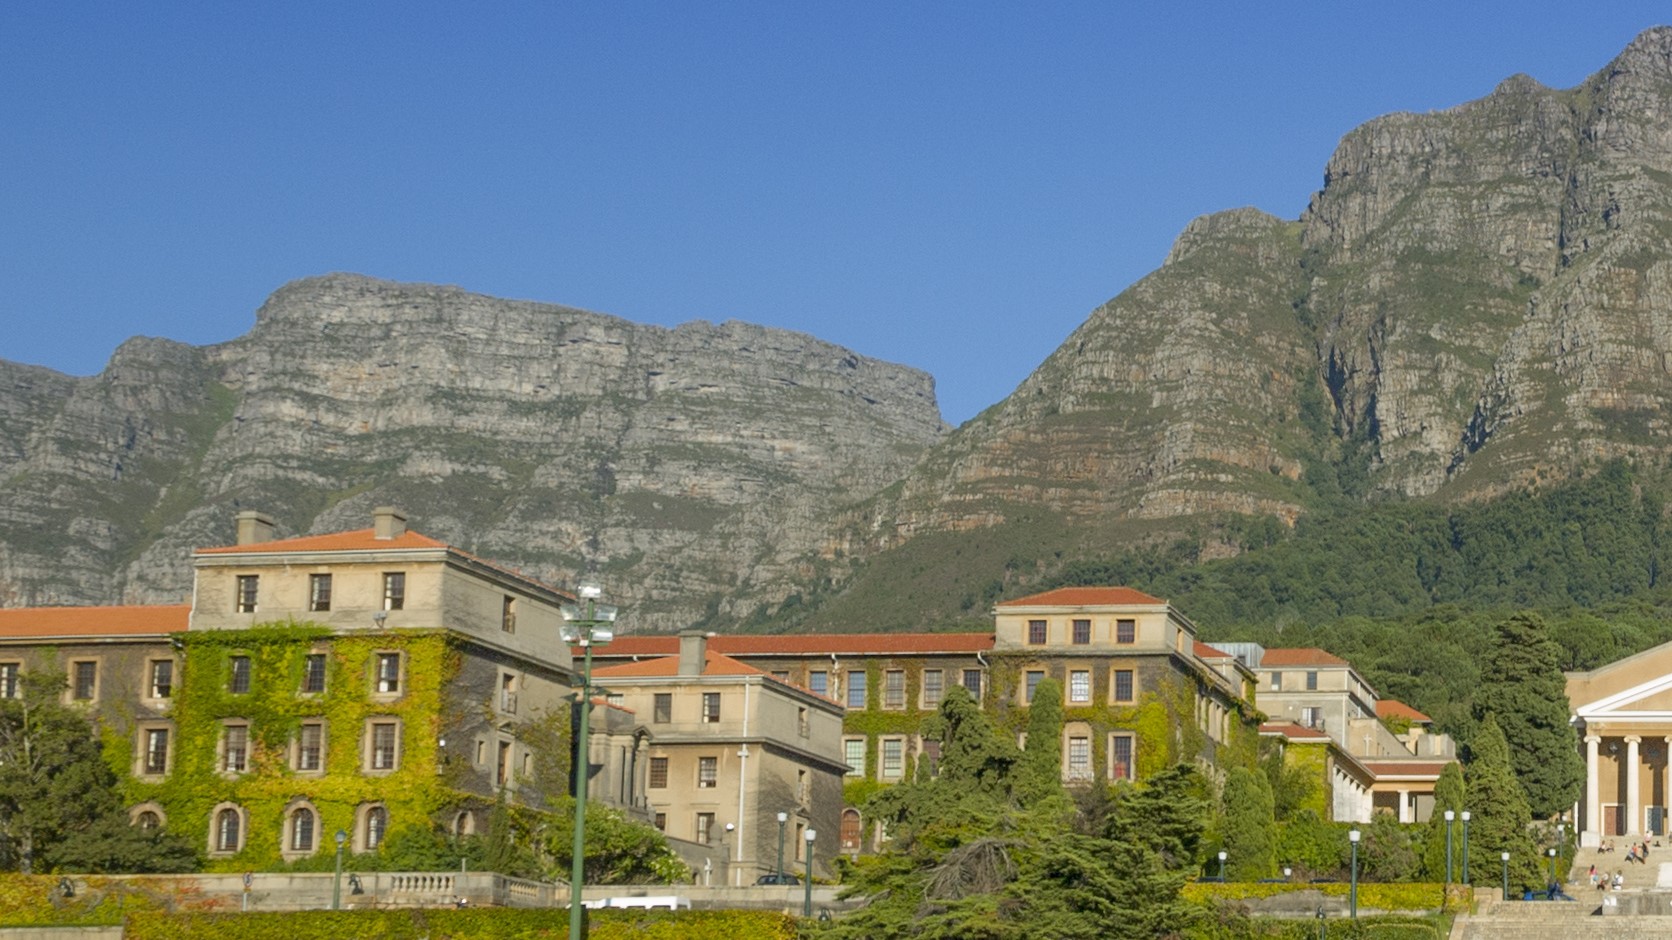 University of Cape Town Campus